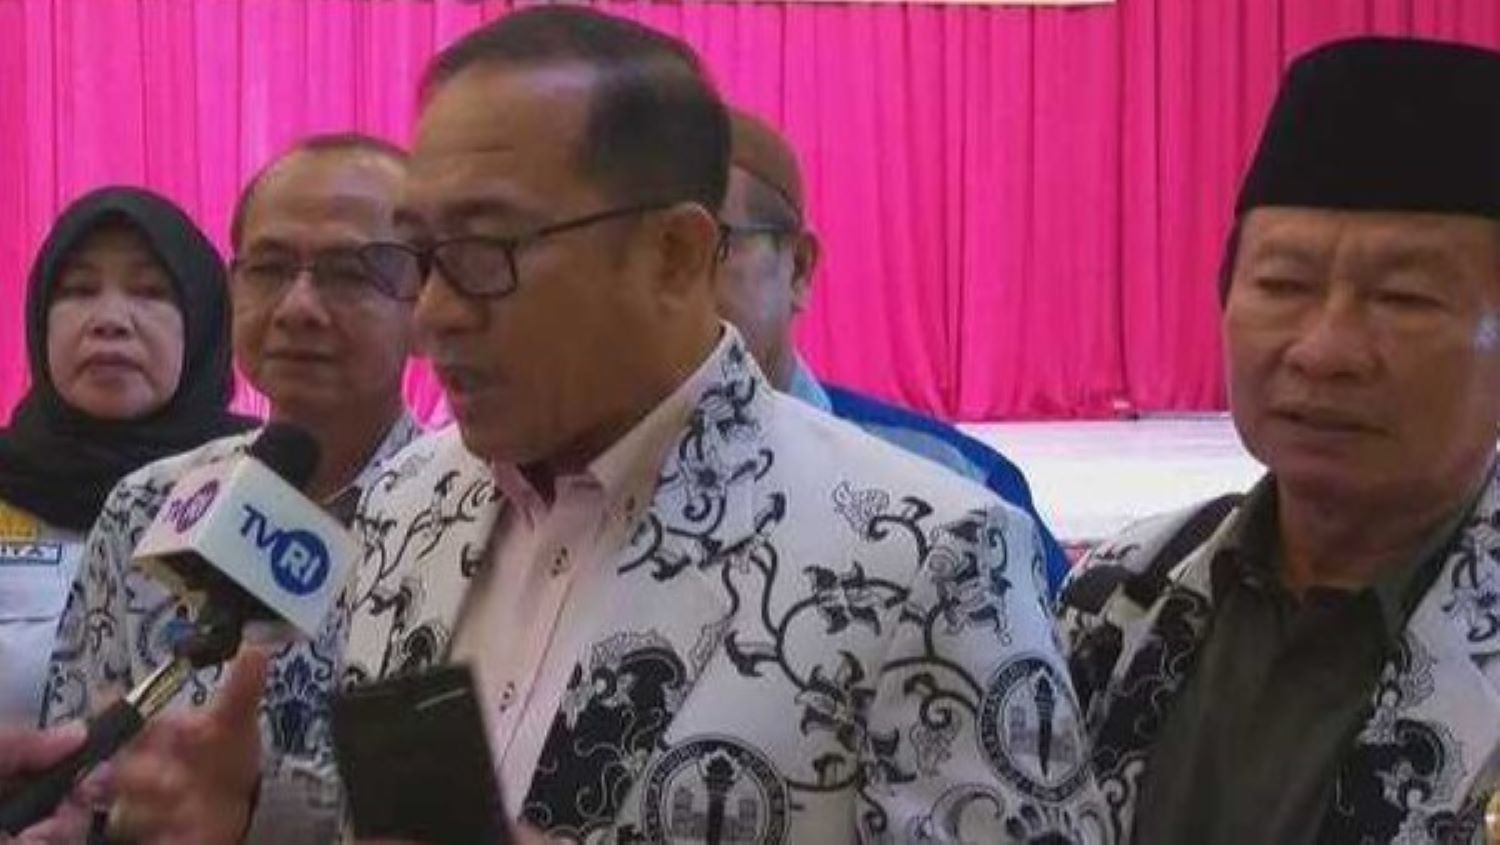 PGRI Sumatera Selatan Galang Koin untuk Guru Sularno, Bayar Denda Rp60 Juta Putusan Pengadilan